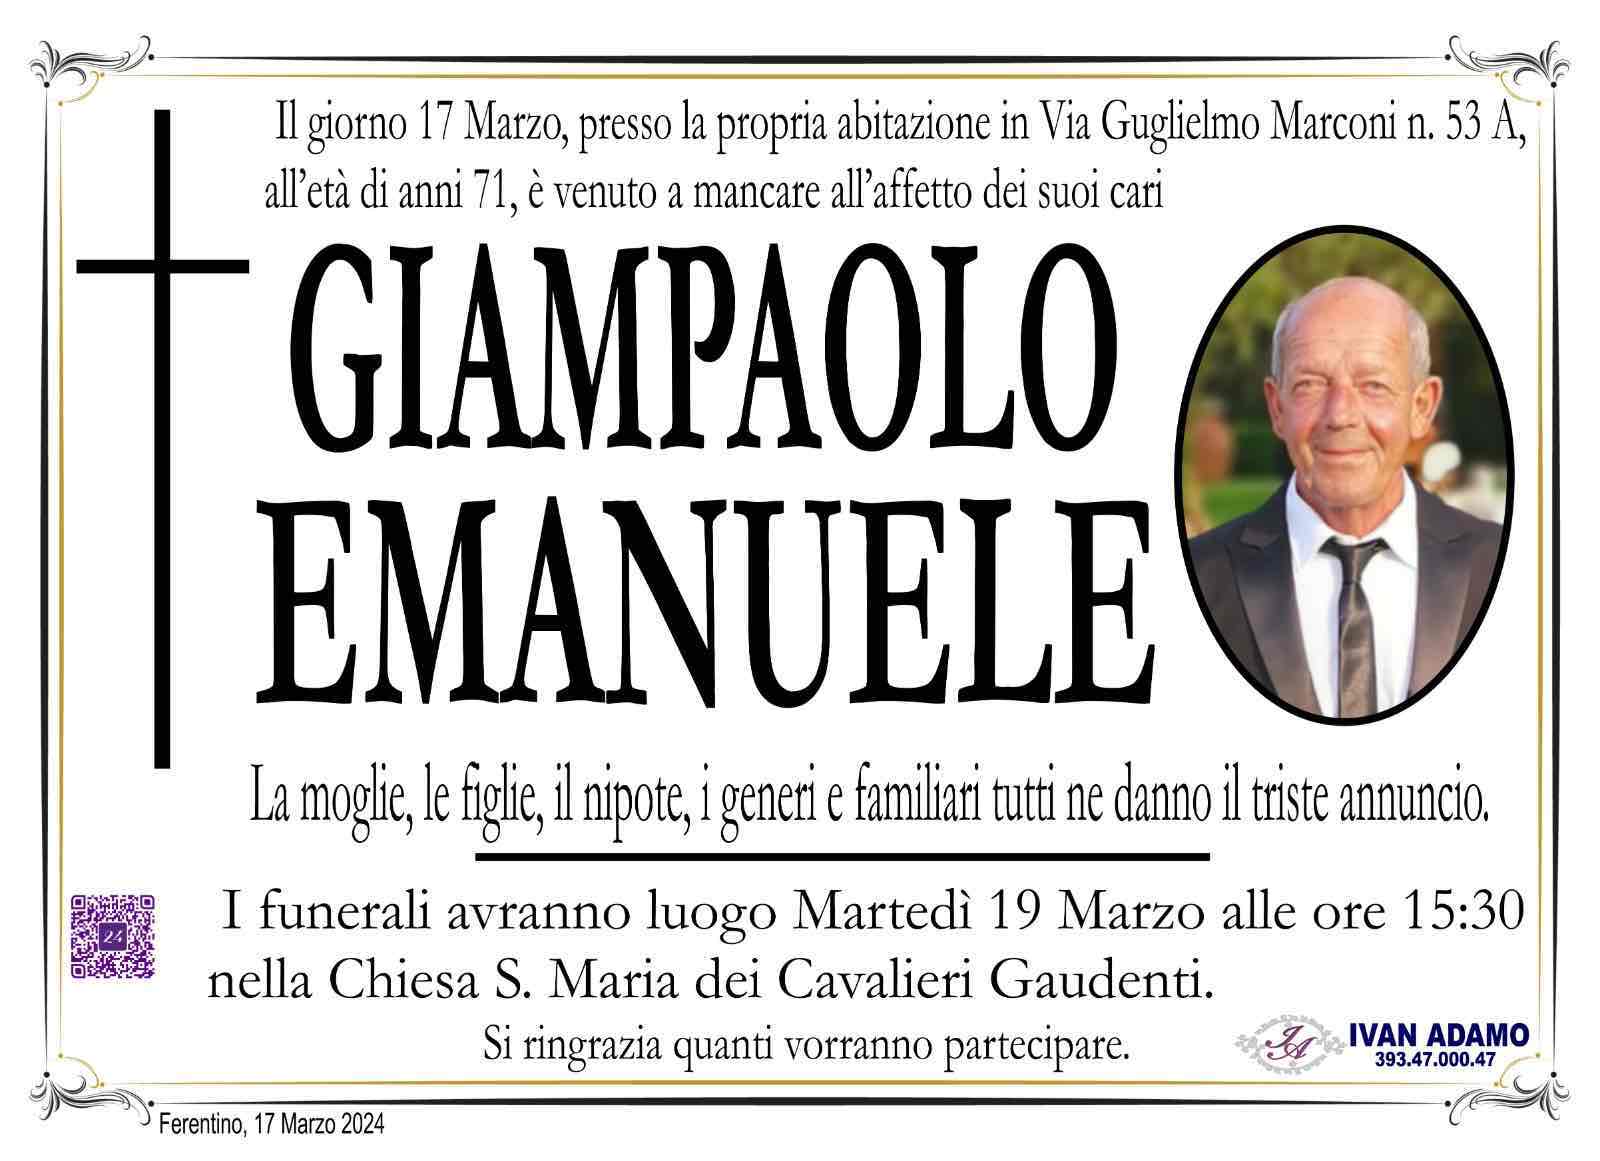 Giampaolo Emanuele